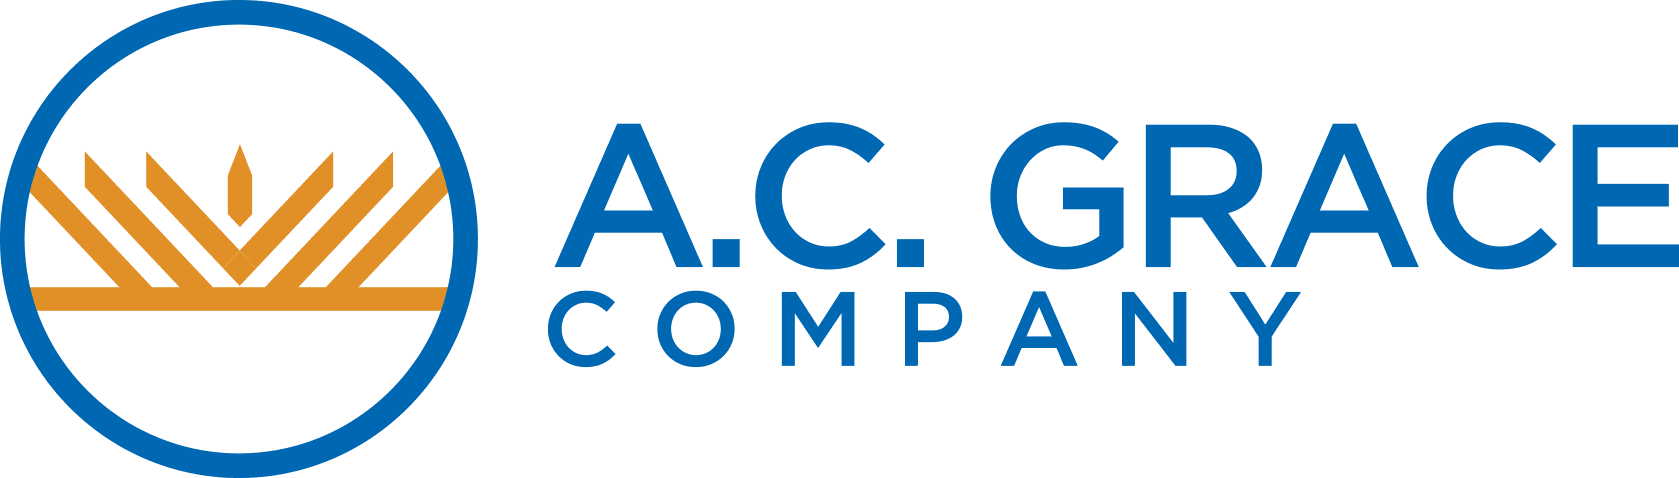 A.C. Grace Company Logo